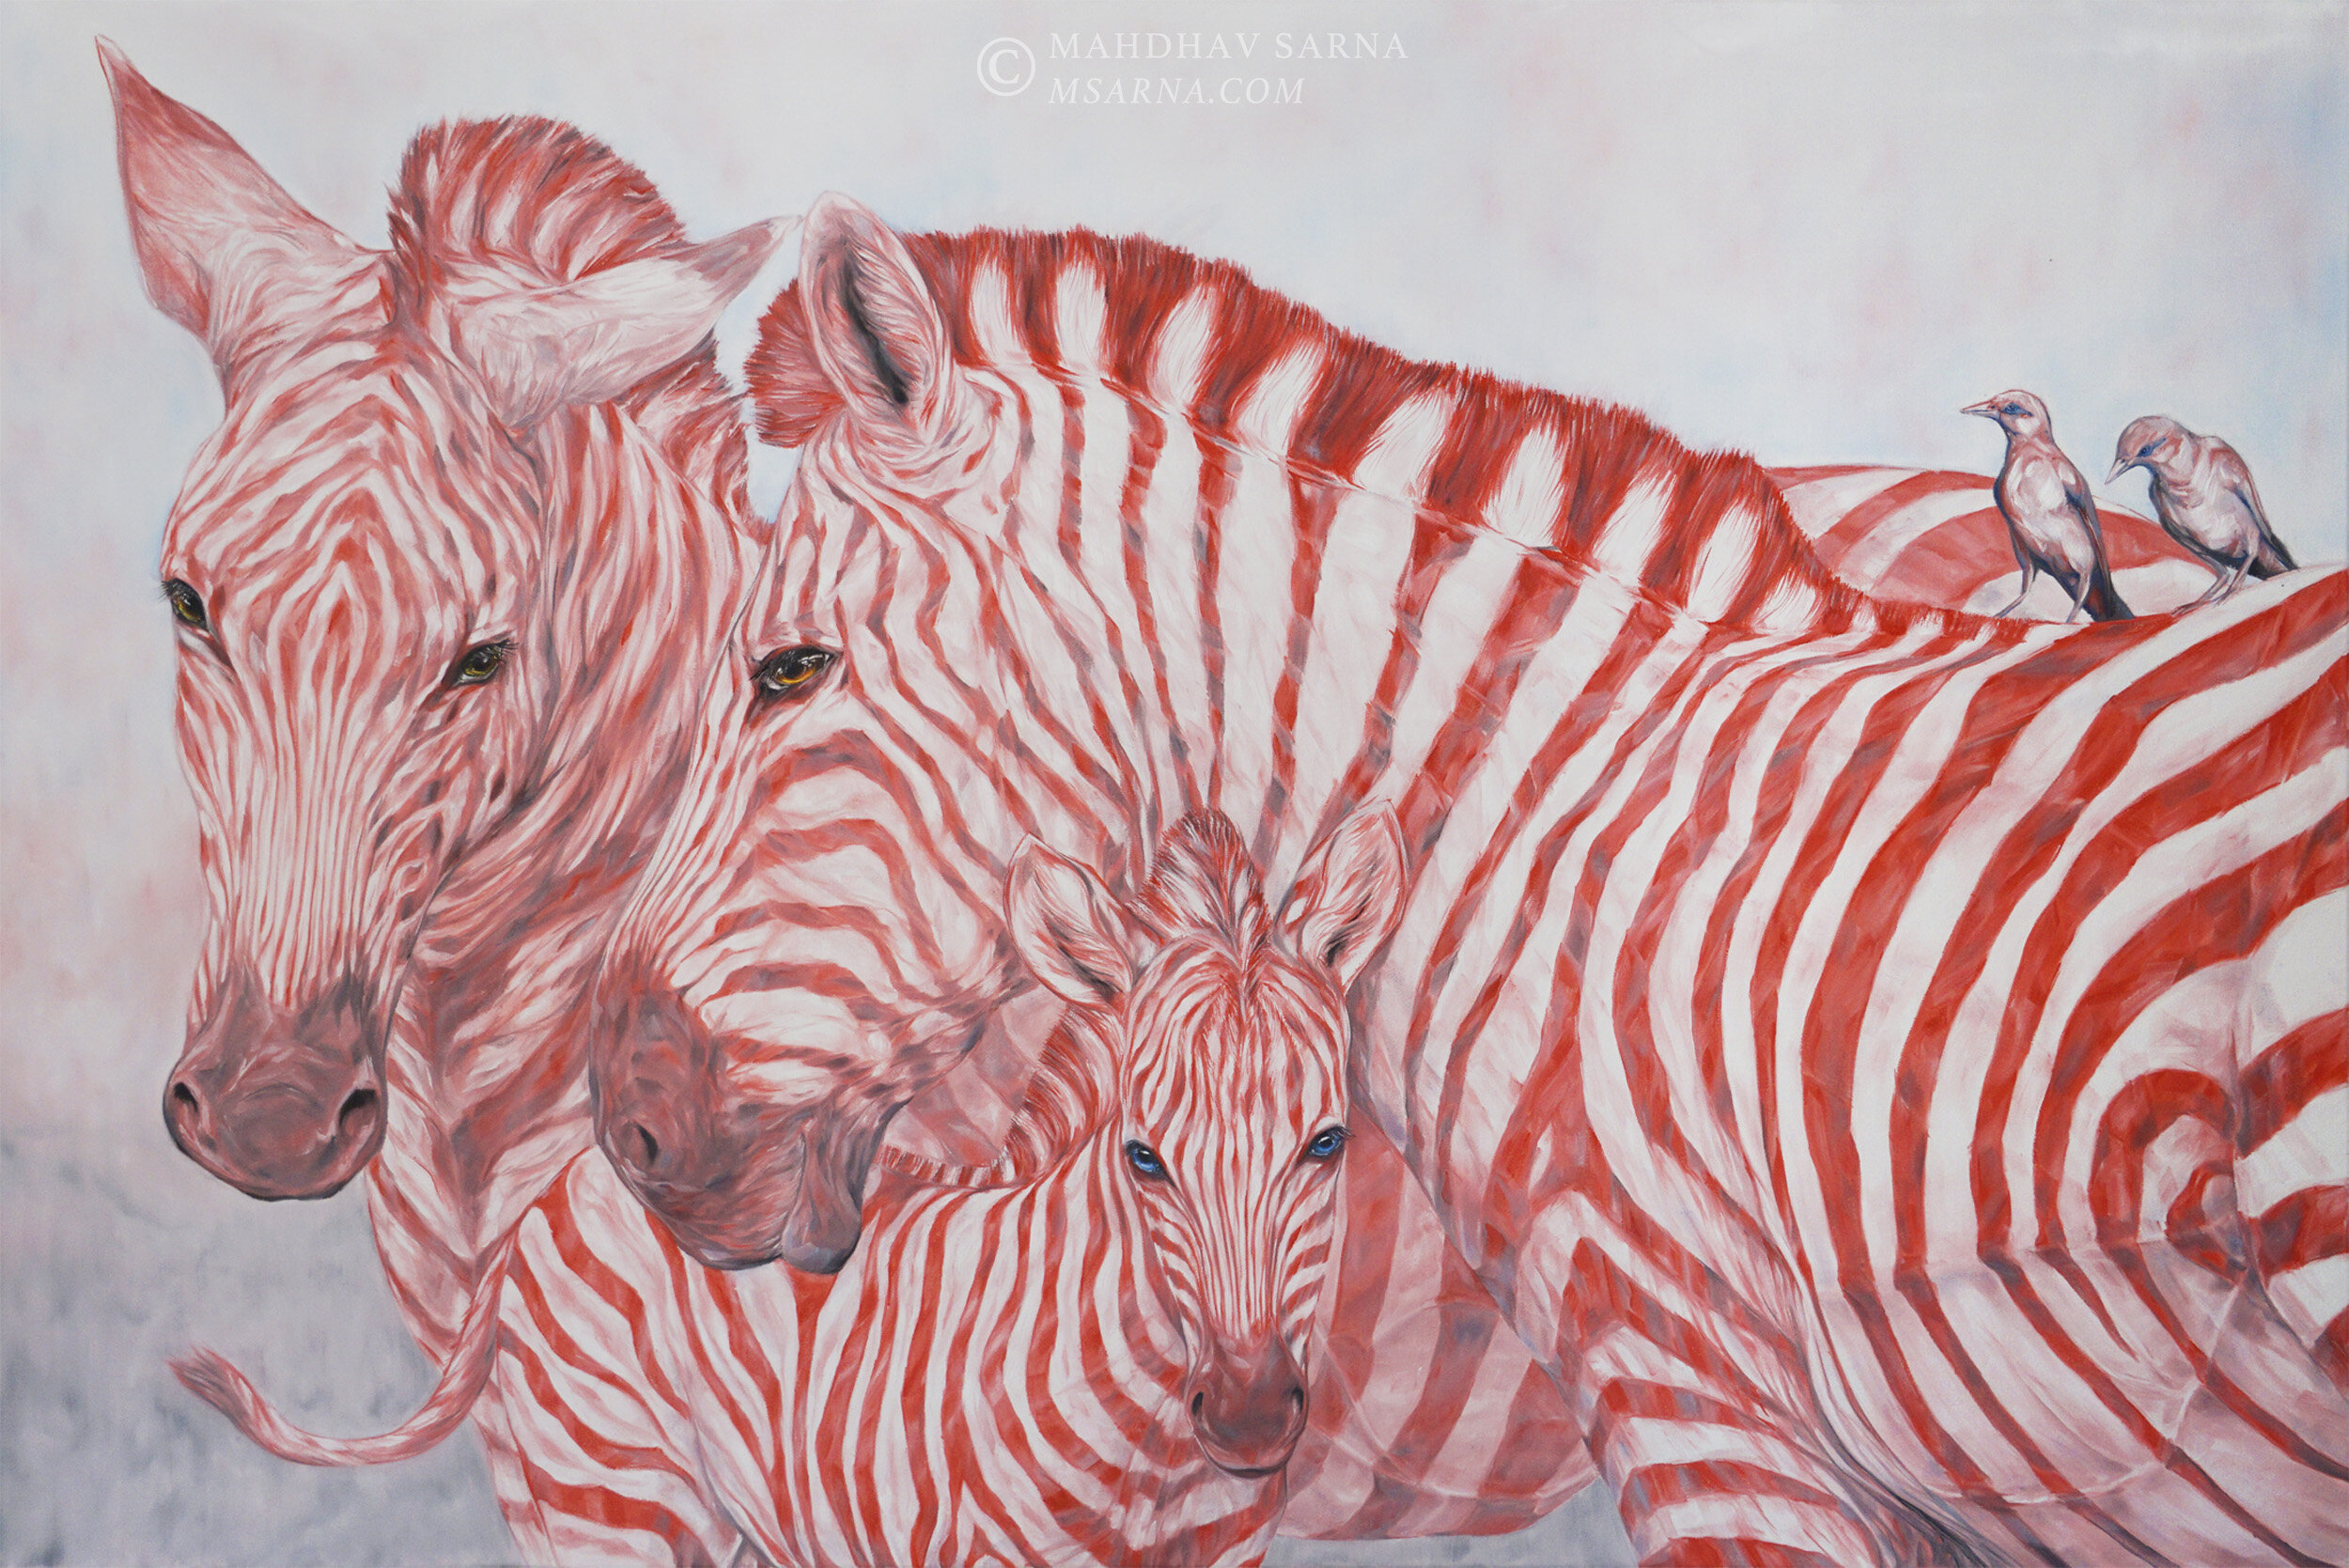 zebra oil painting wifi wildlife art mahdhav sarna 01.jpg